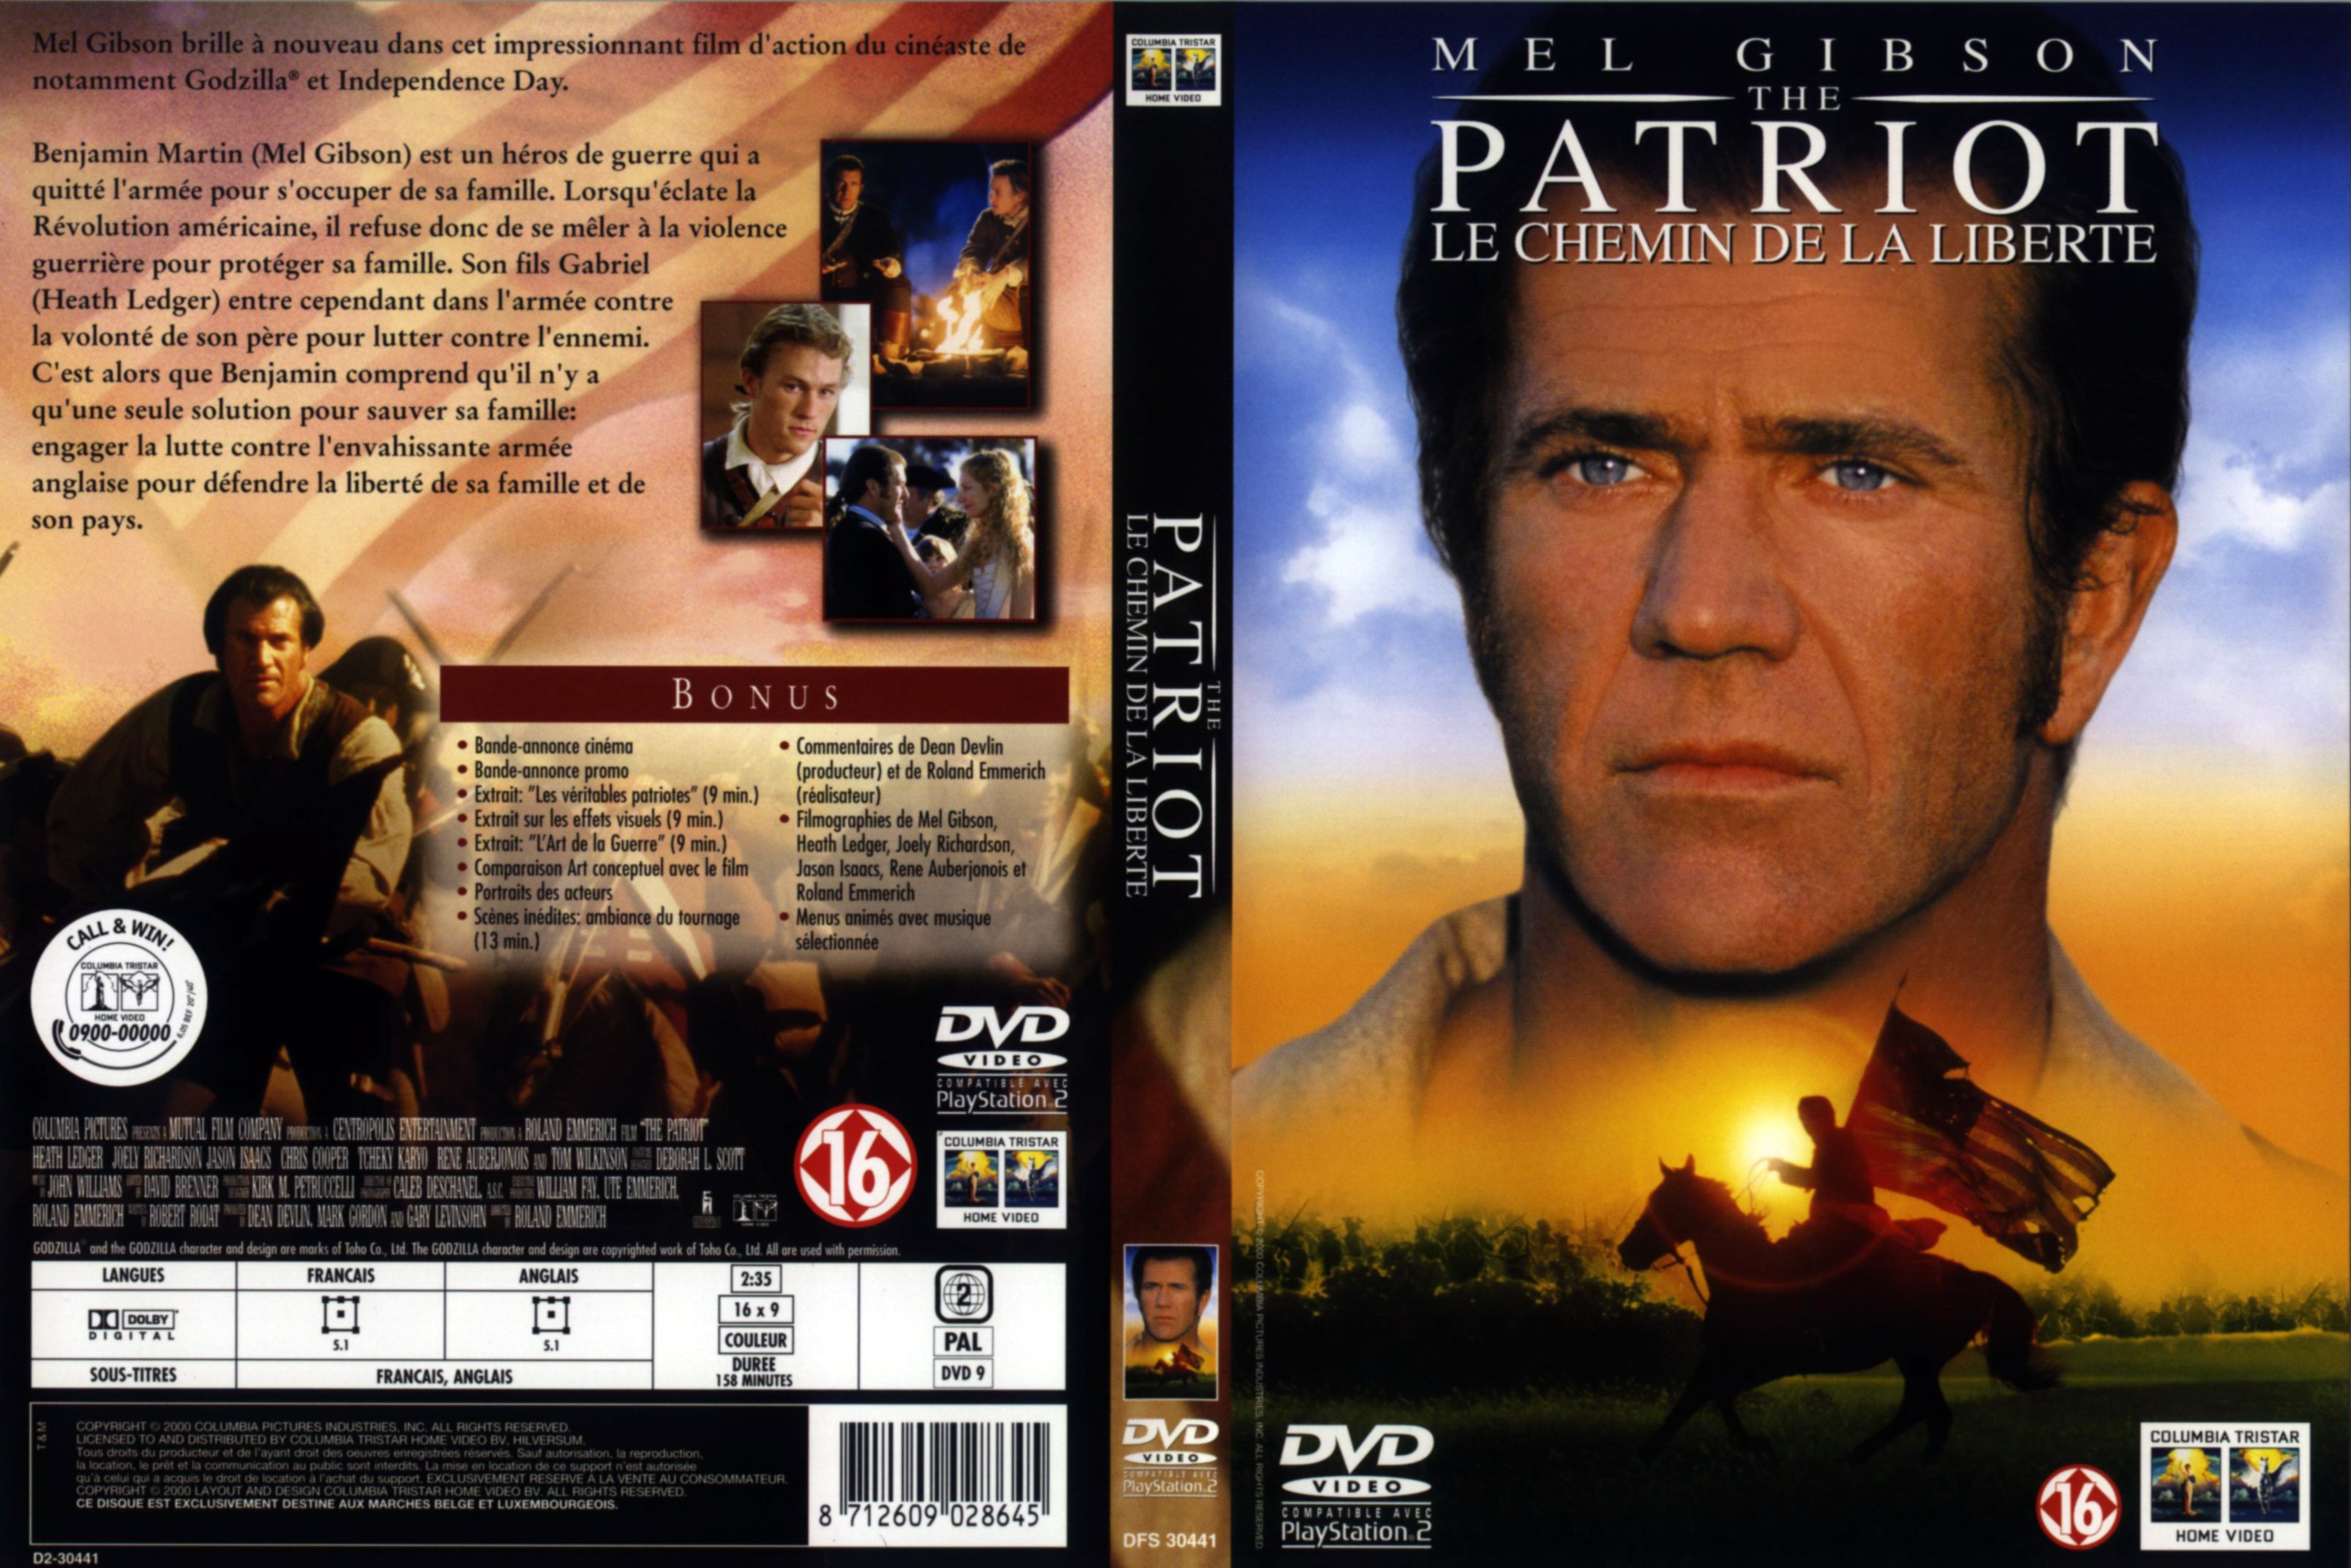 Jaquette DVD The patriot v2